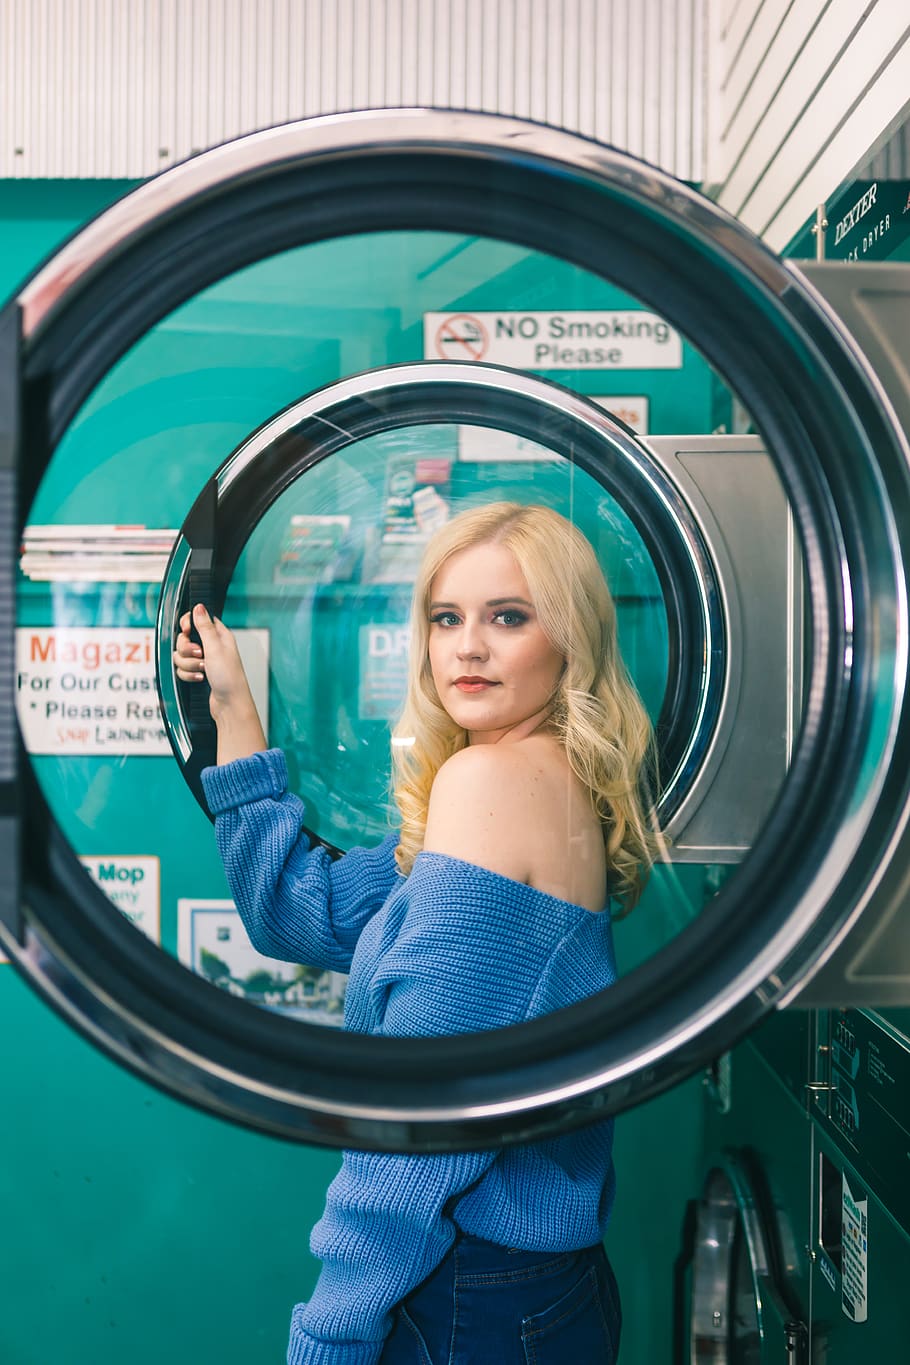 Woman in Blue Off-shoulder Long-sleeved Shirt Standing Beside Washing Machine